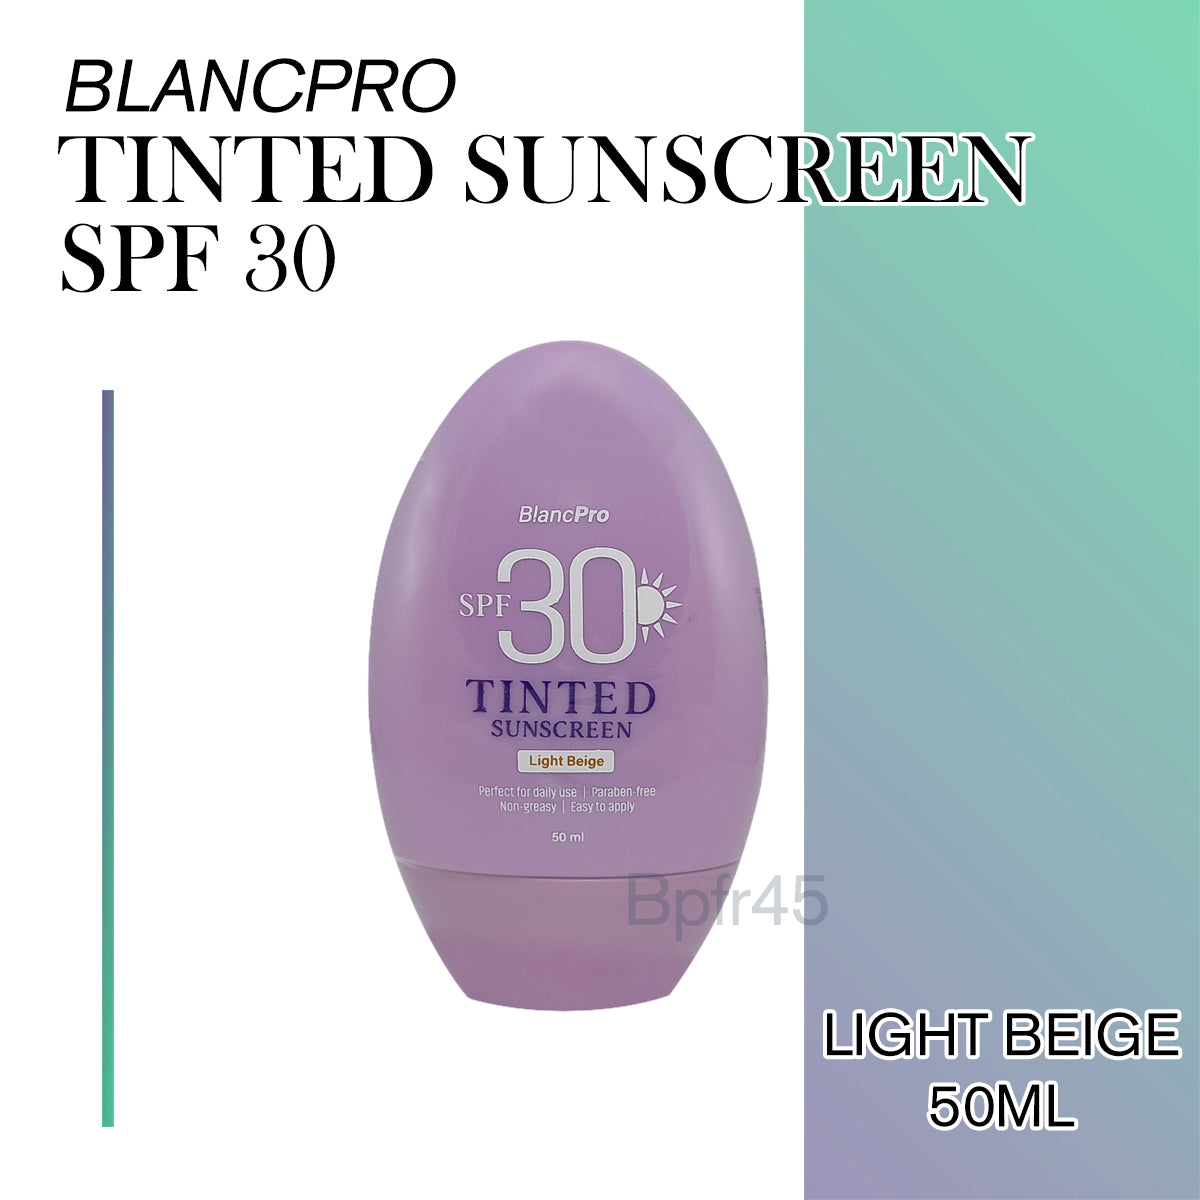 Blanc Pro Tinted Sunscreen SPF30 50ml Blancpro PROMO